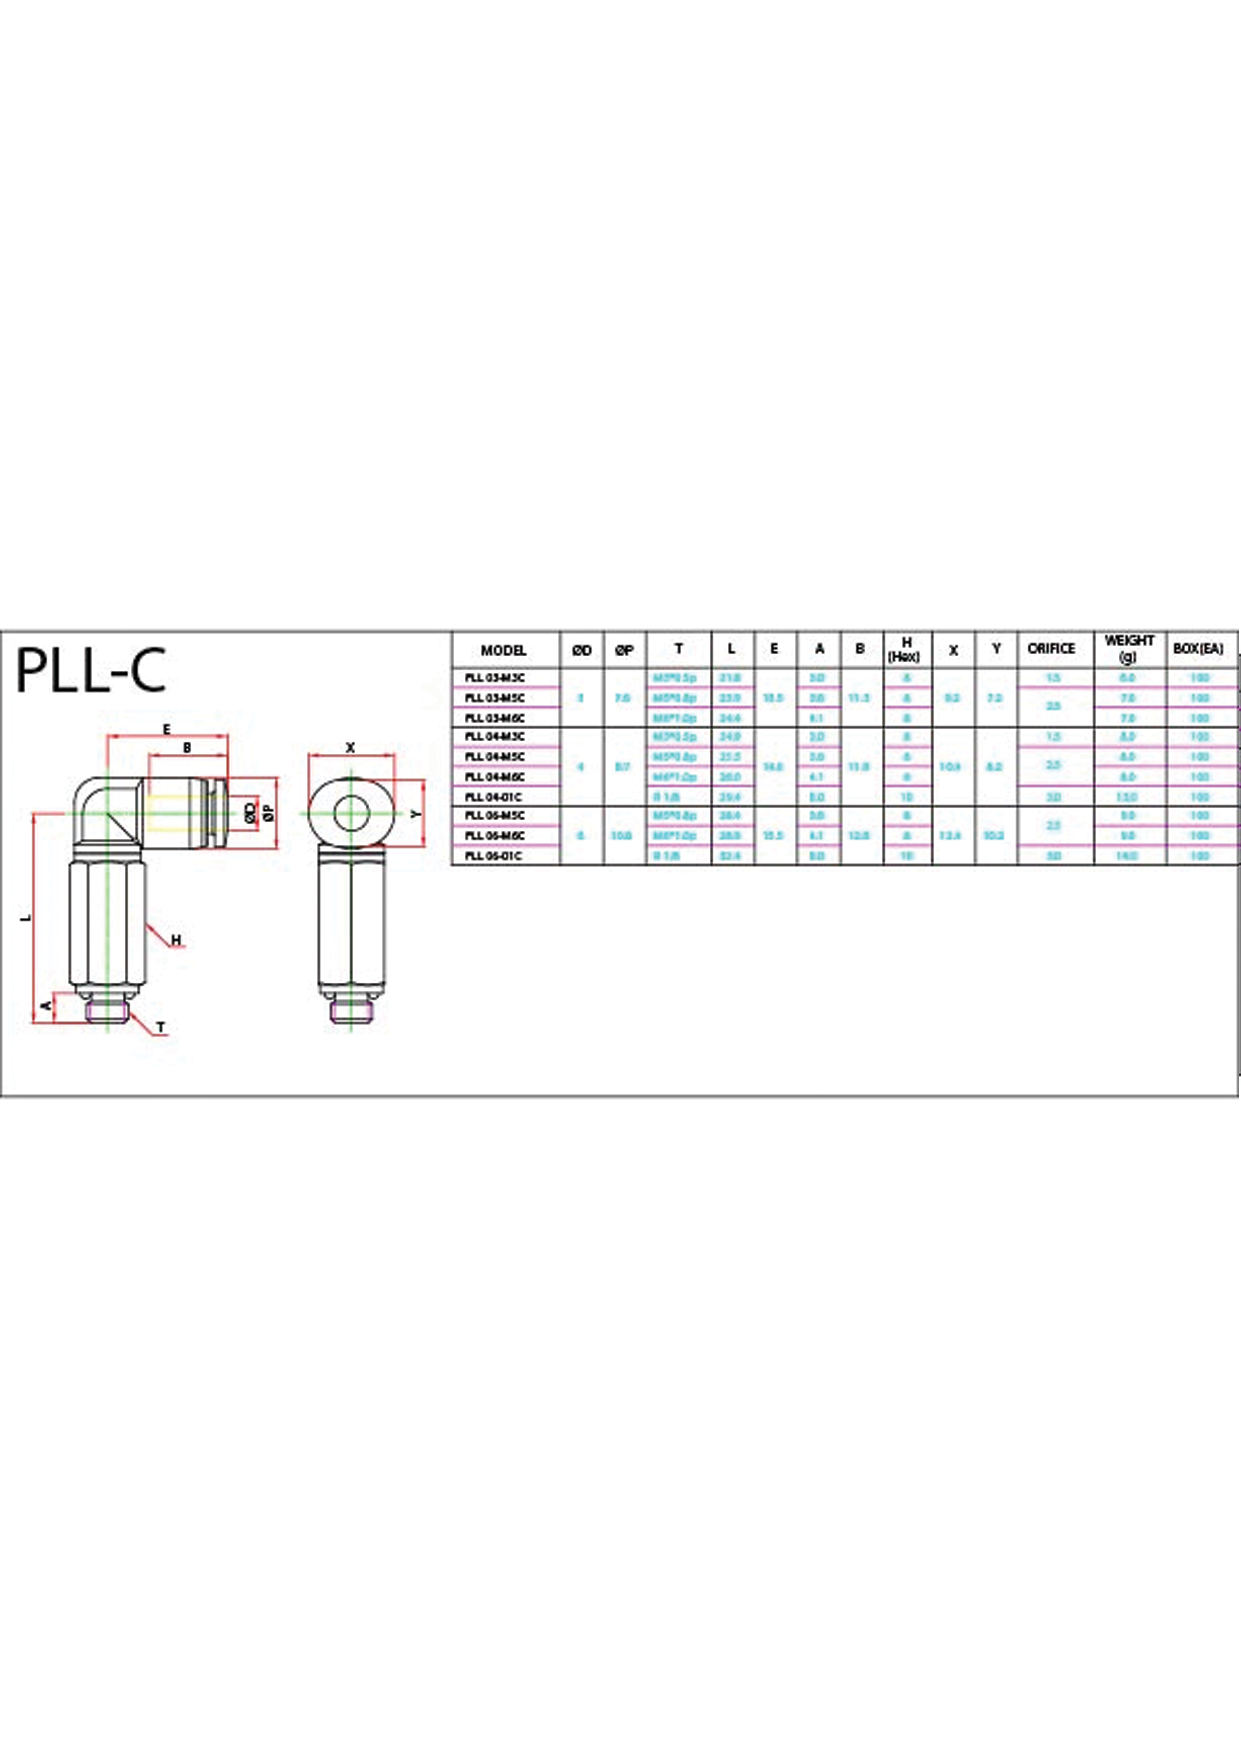 PLL-C Data Sheet ( 117 KB )